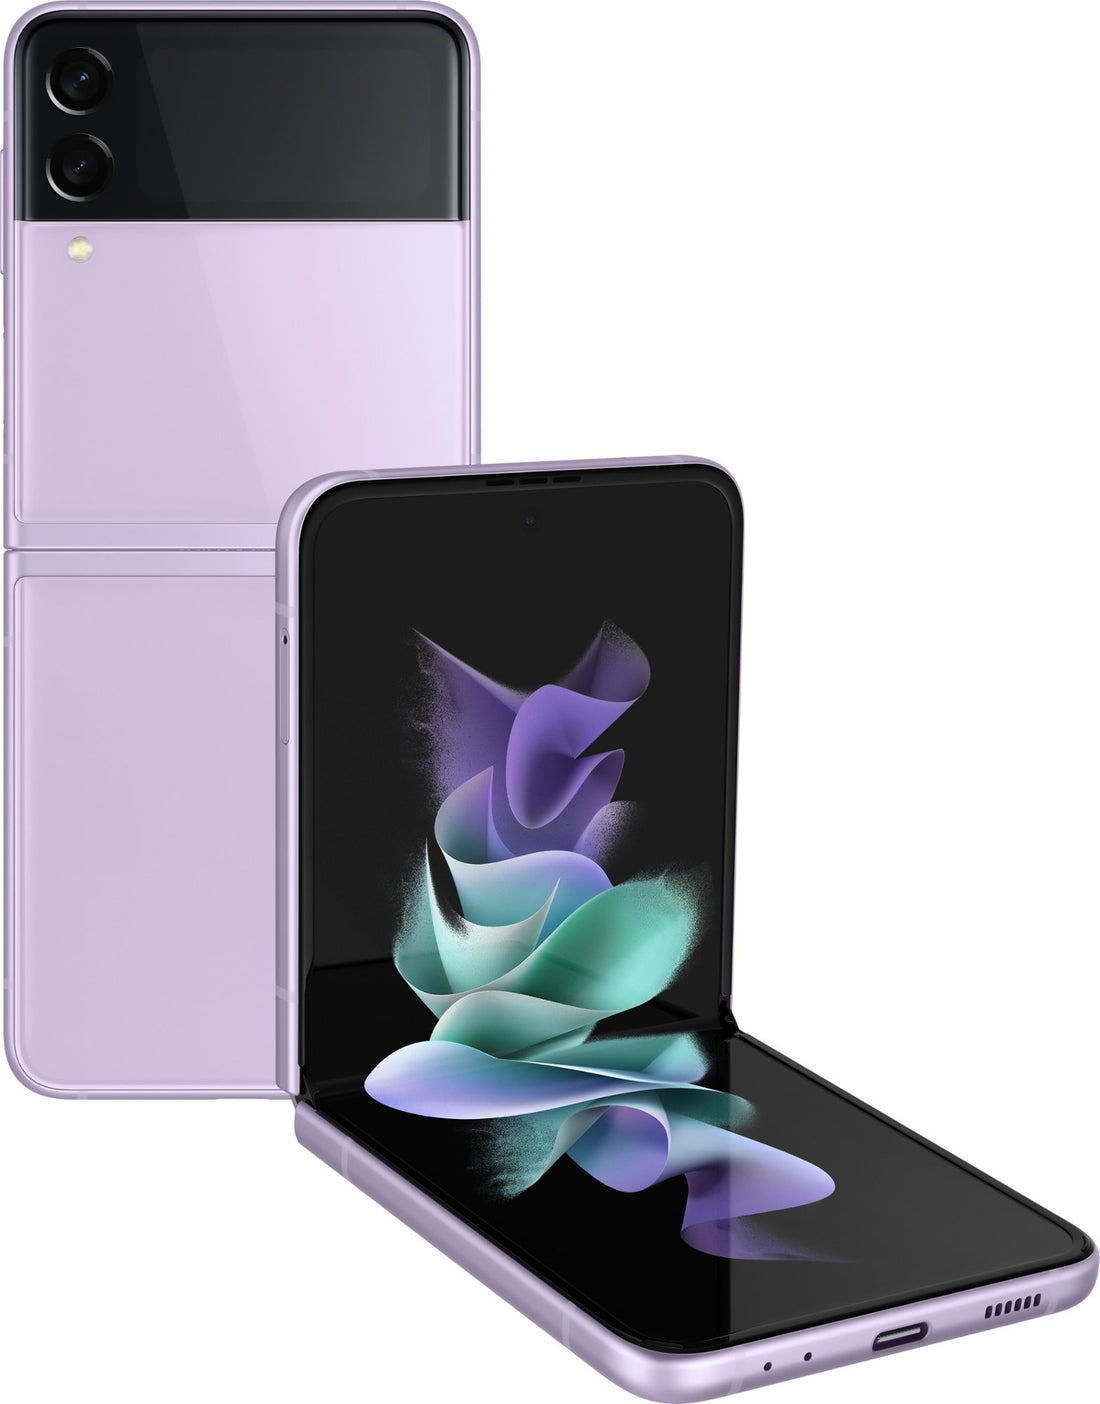 Samsung Galaxy Z Flip3 5G 256GB (Unlocked) - Lavender (Pre-Owned)